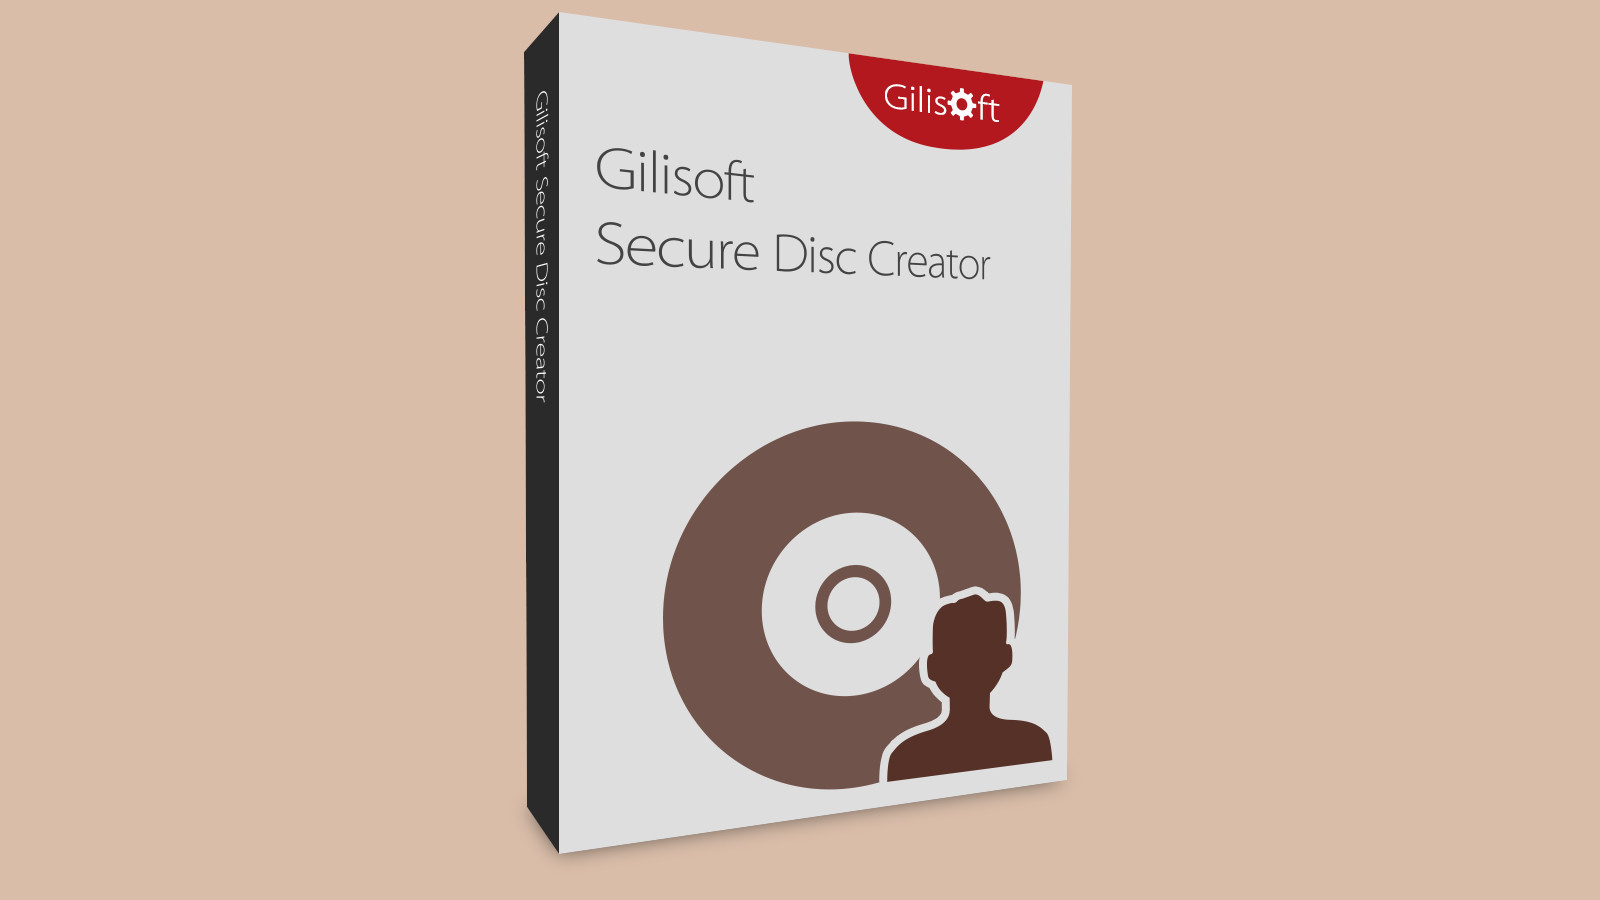 Gilisoft Secure Disc Creator CD Key 6.84 $